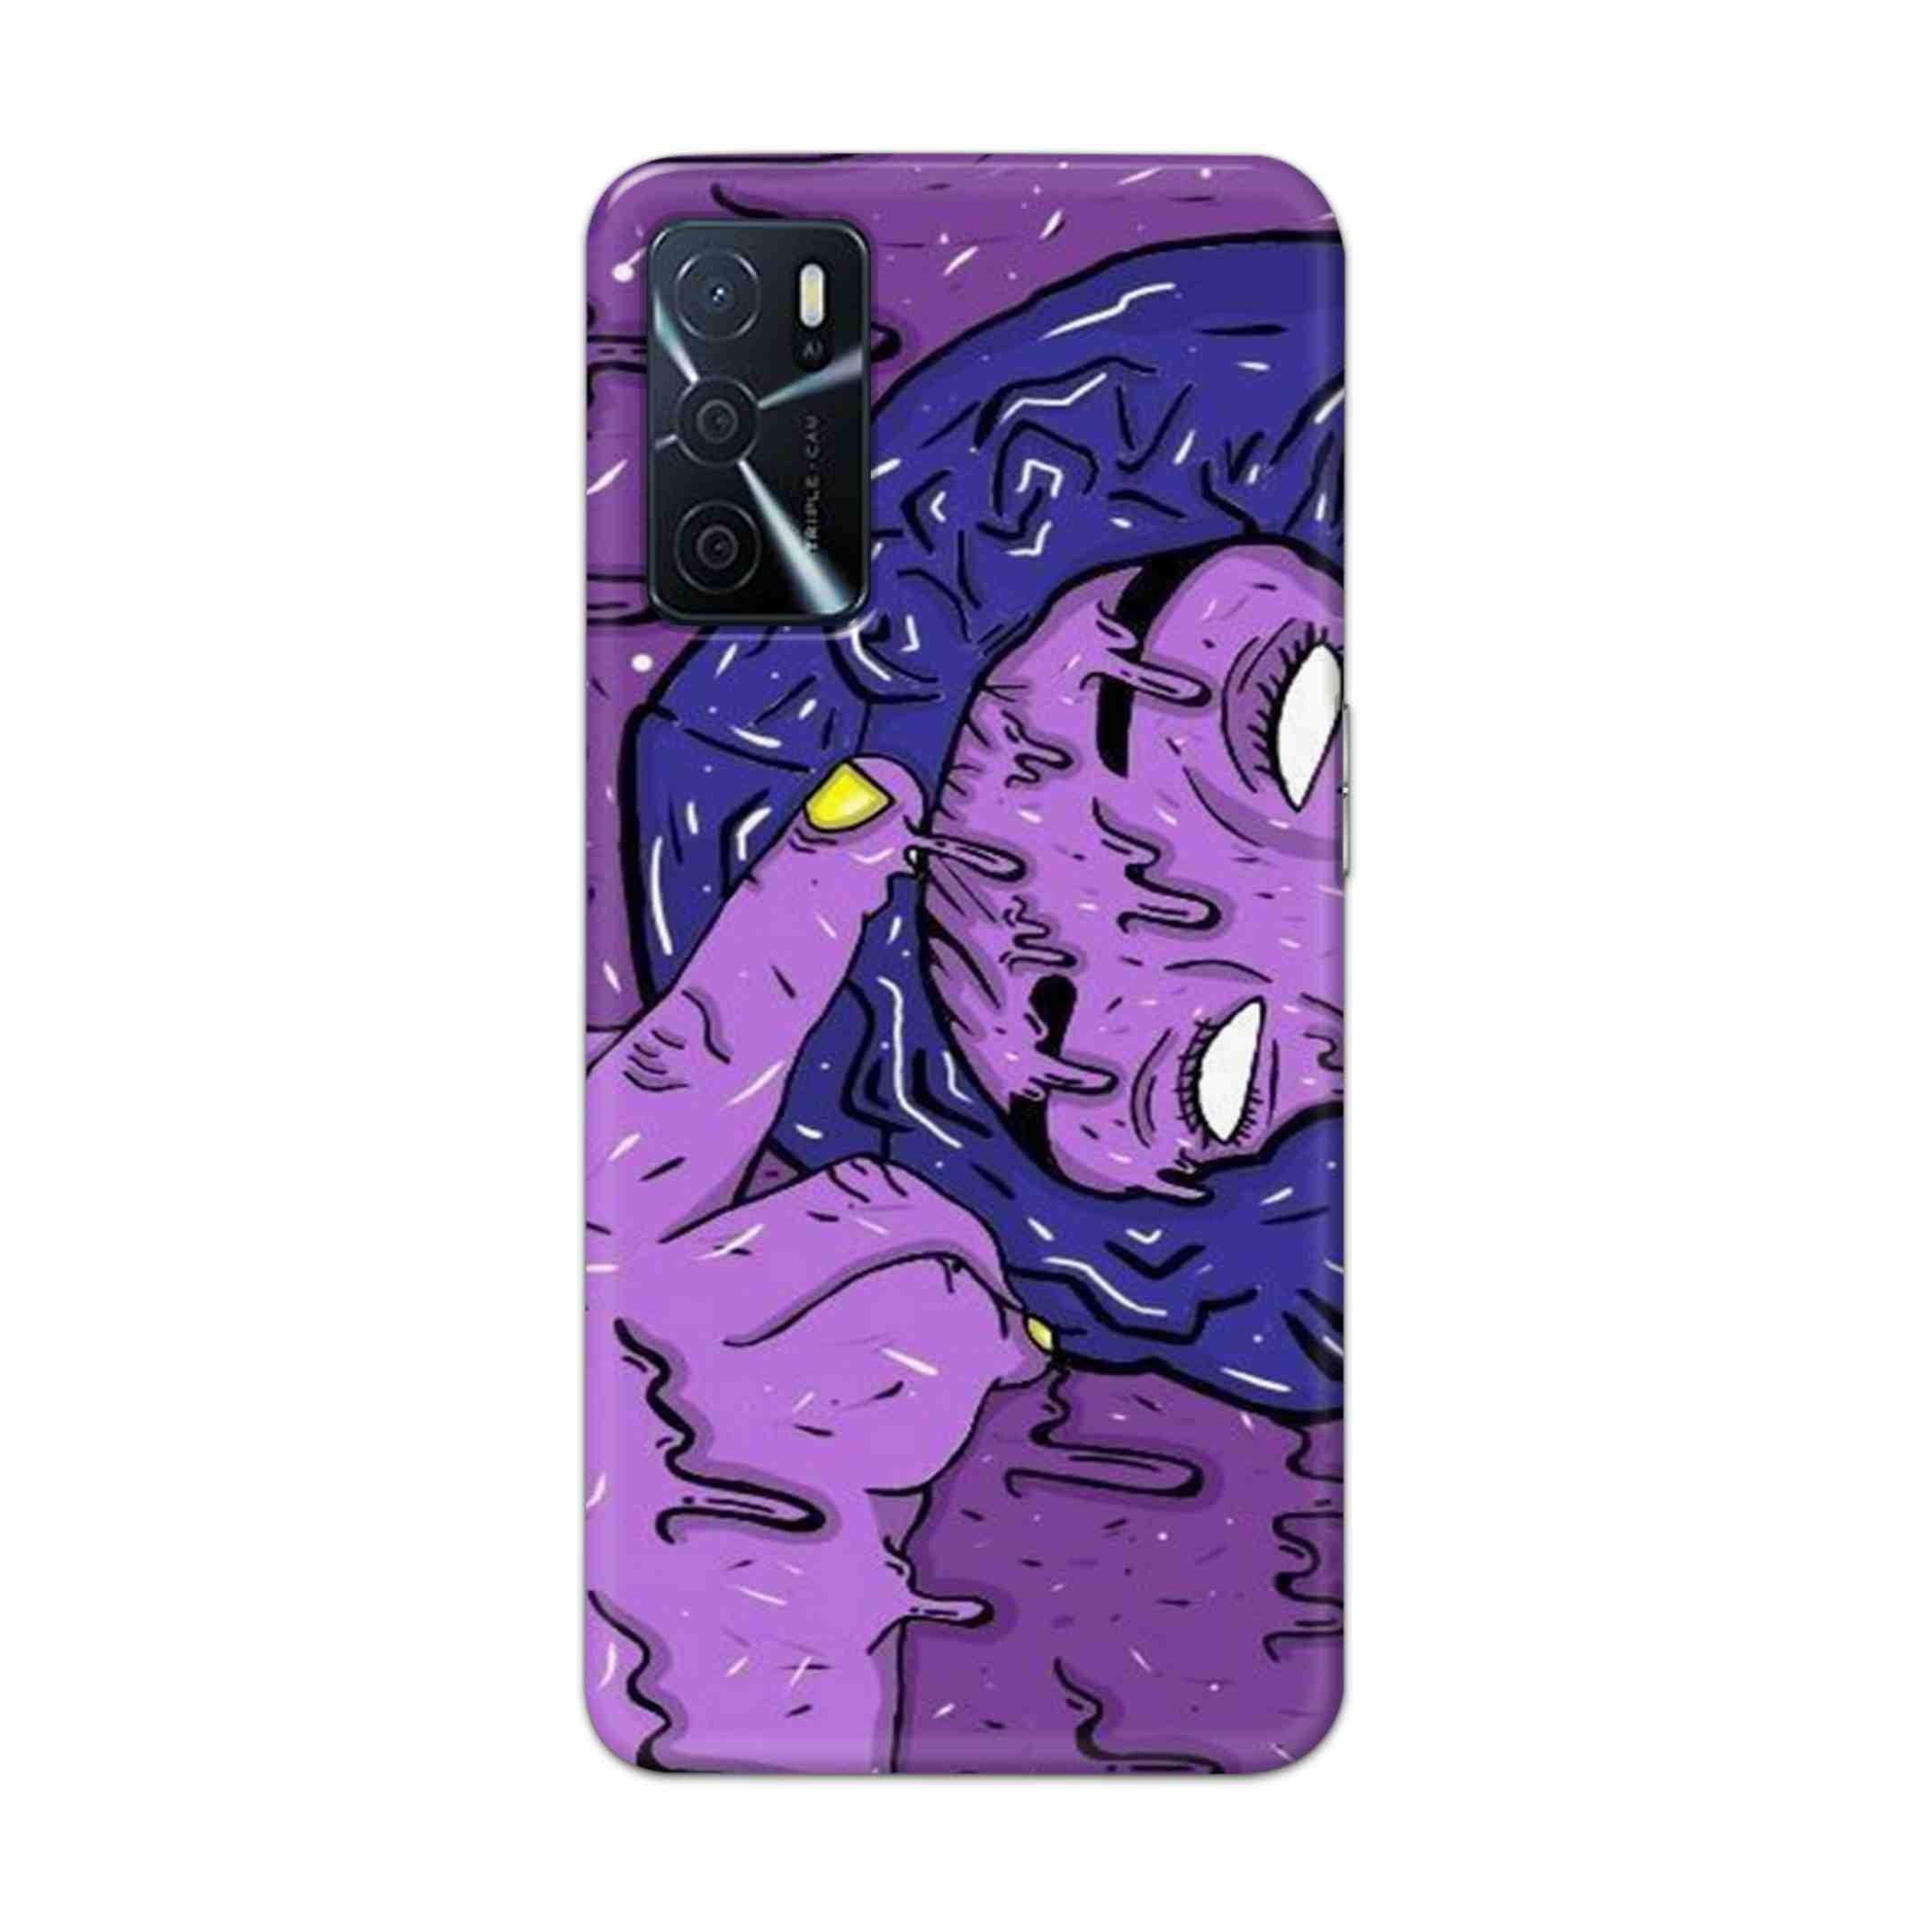 Buy Dashing Art Hard Back Mobile Phone Case Cover For Oppo A16 Online